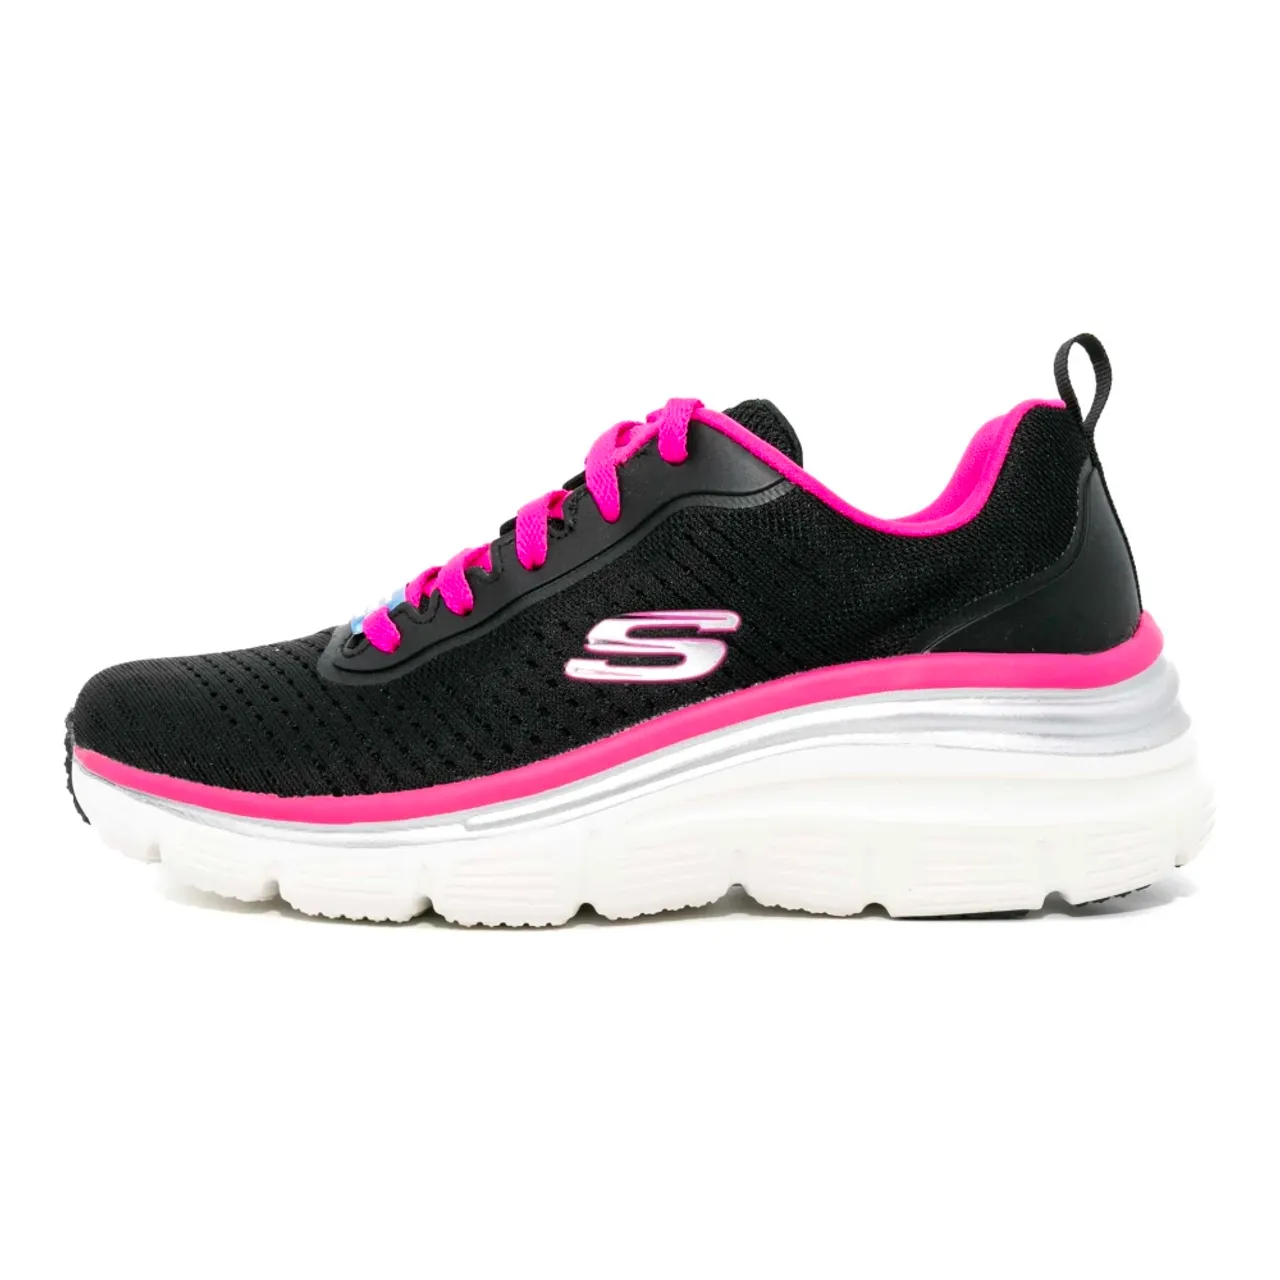 Skechers - Shoes 